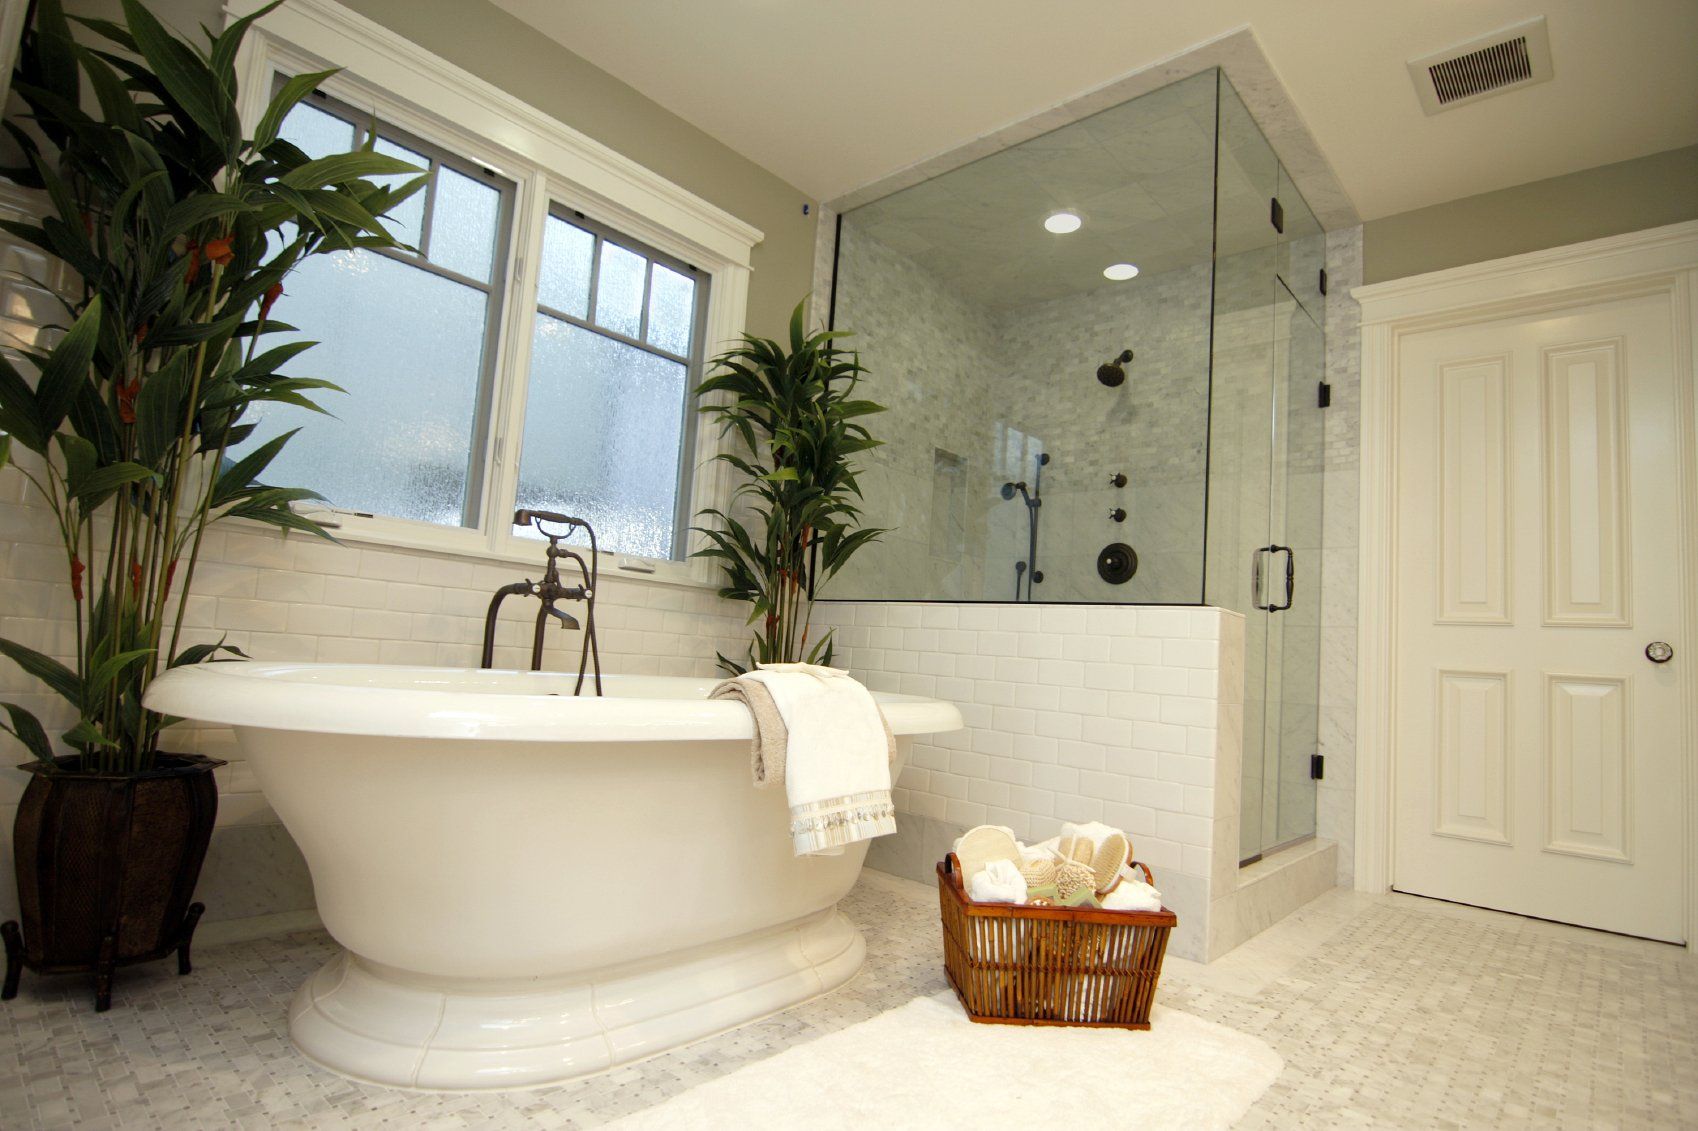 A clean bathroom, with a shining bath, shower, and floor.